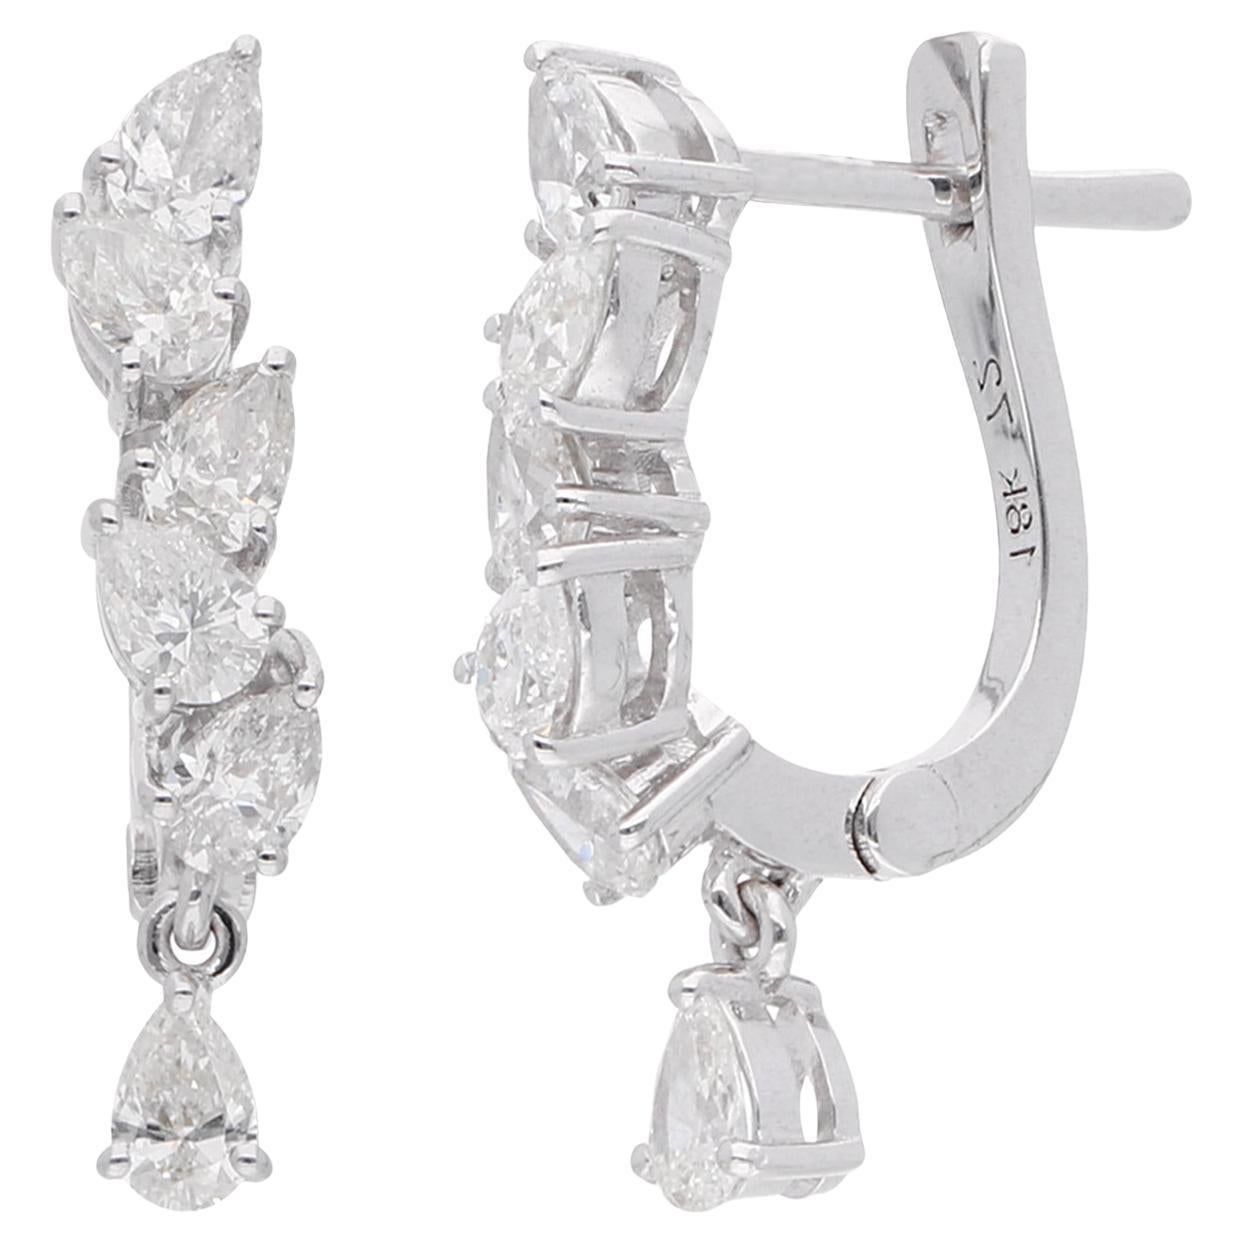 1 Carat Pear Shape Diamond Hoop Earrings 18 Karat White Gold Handmade Jewelry (Boucles d'oreilles en or blanc 18 carats avec diamants)